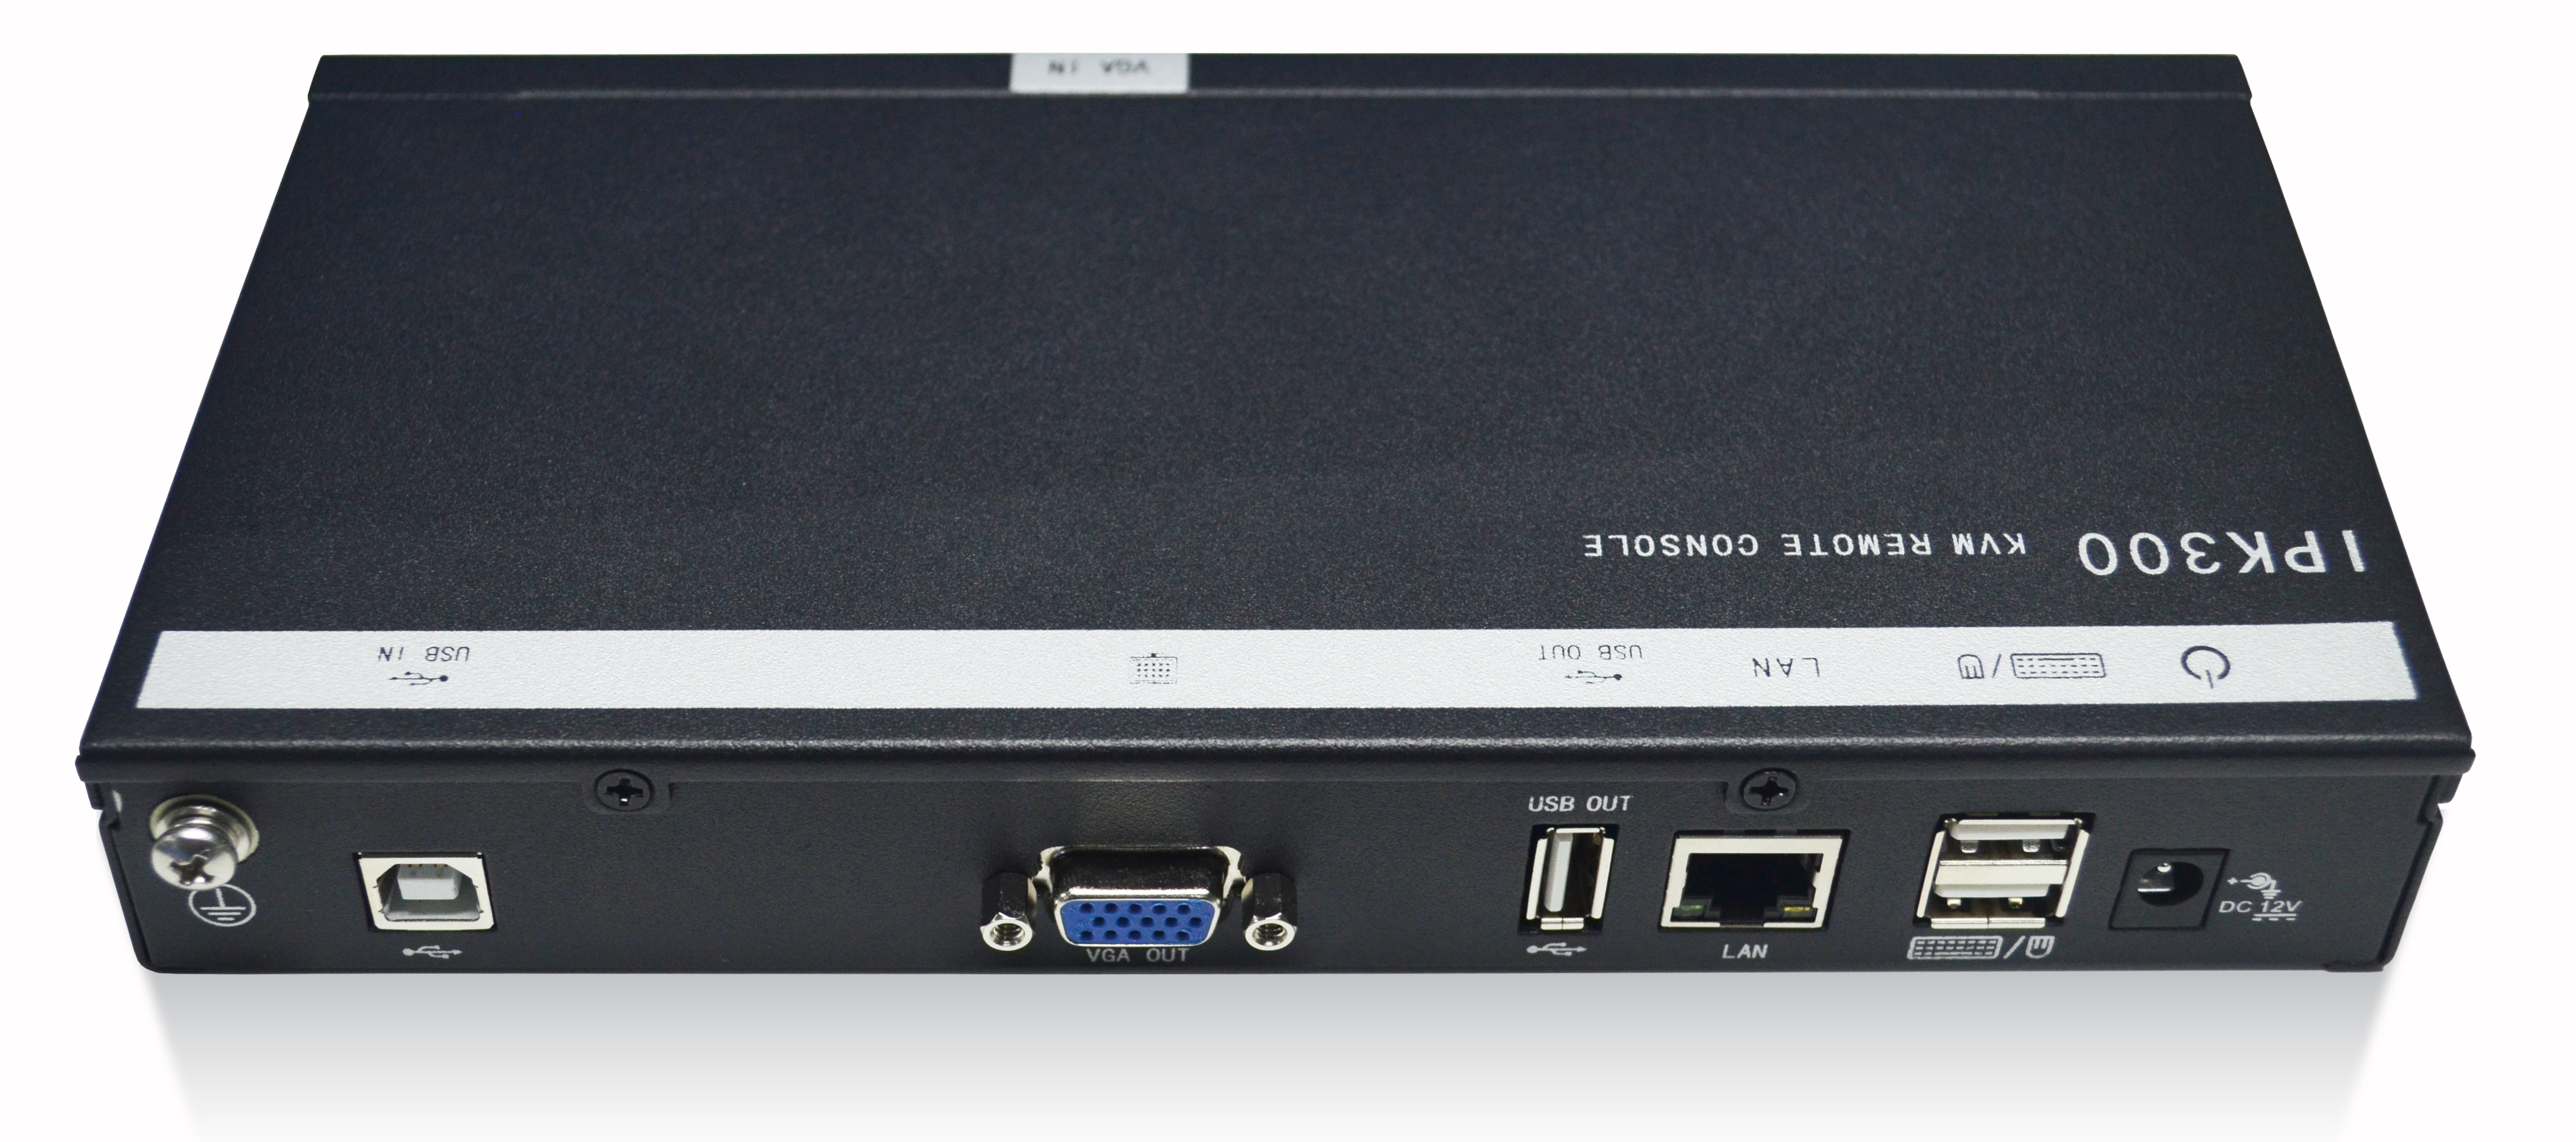 KVM over IP Switch - 1 Port, VGA, Up to 1920 x 1080@60Hz